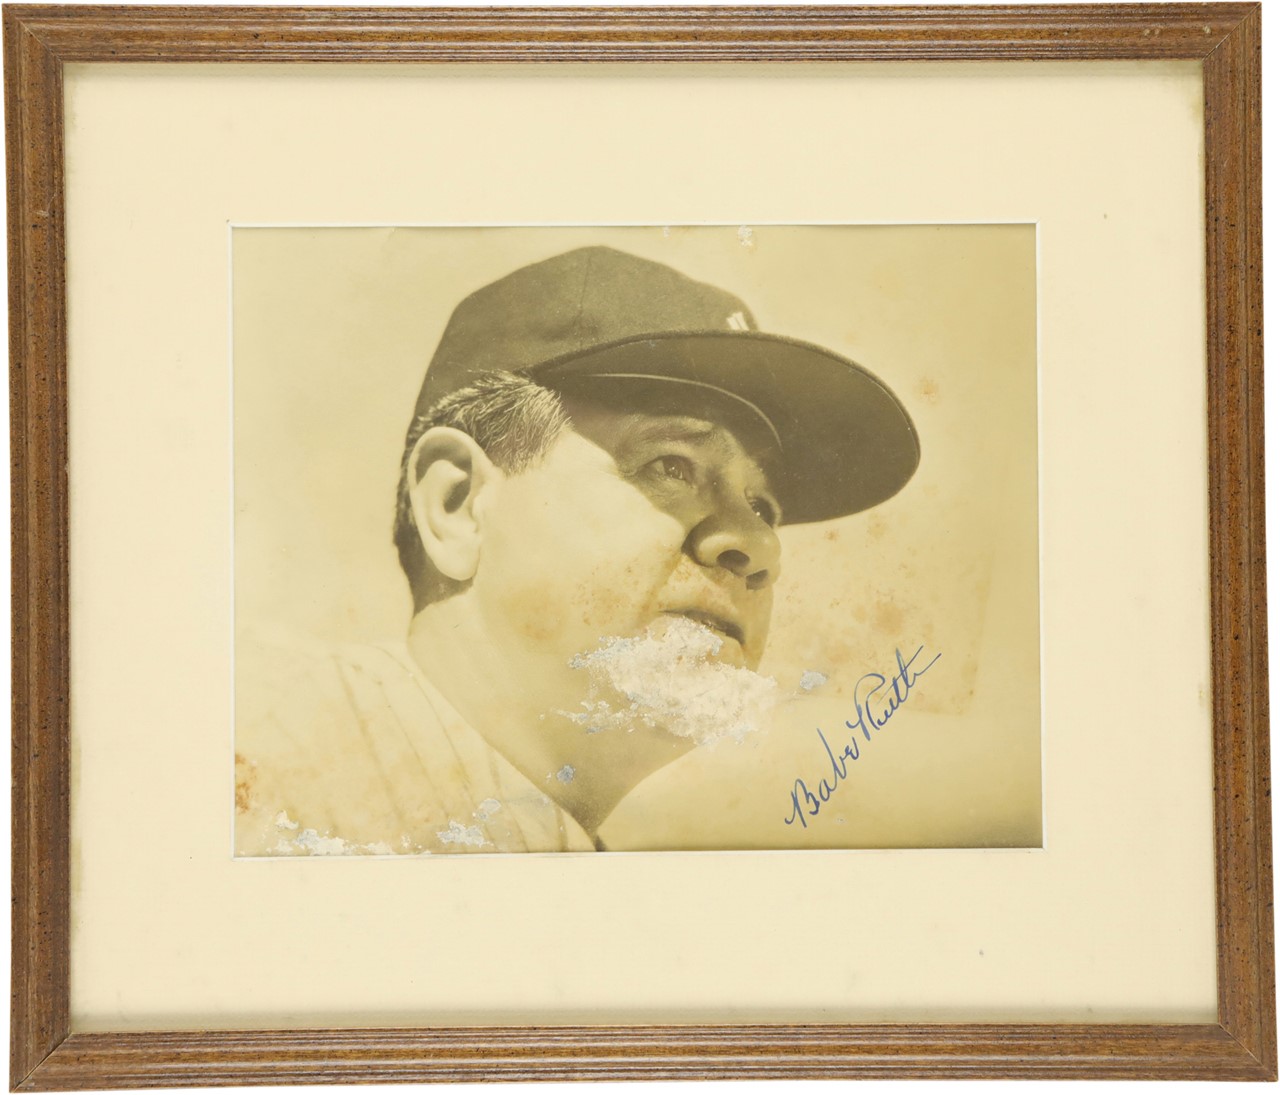 - Stunning Babe Ruth Signed Photograph (PSA)